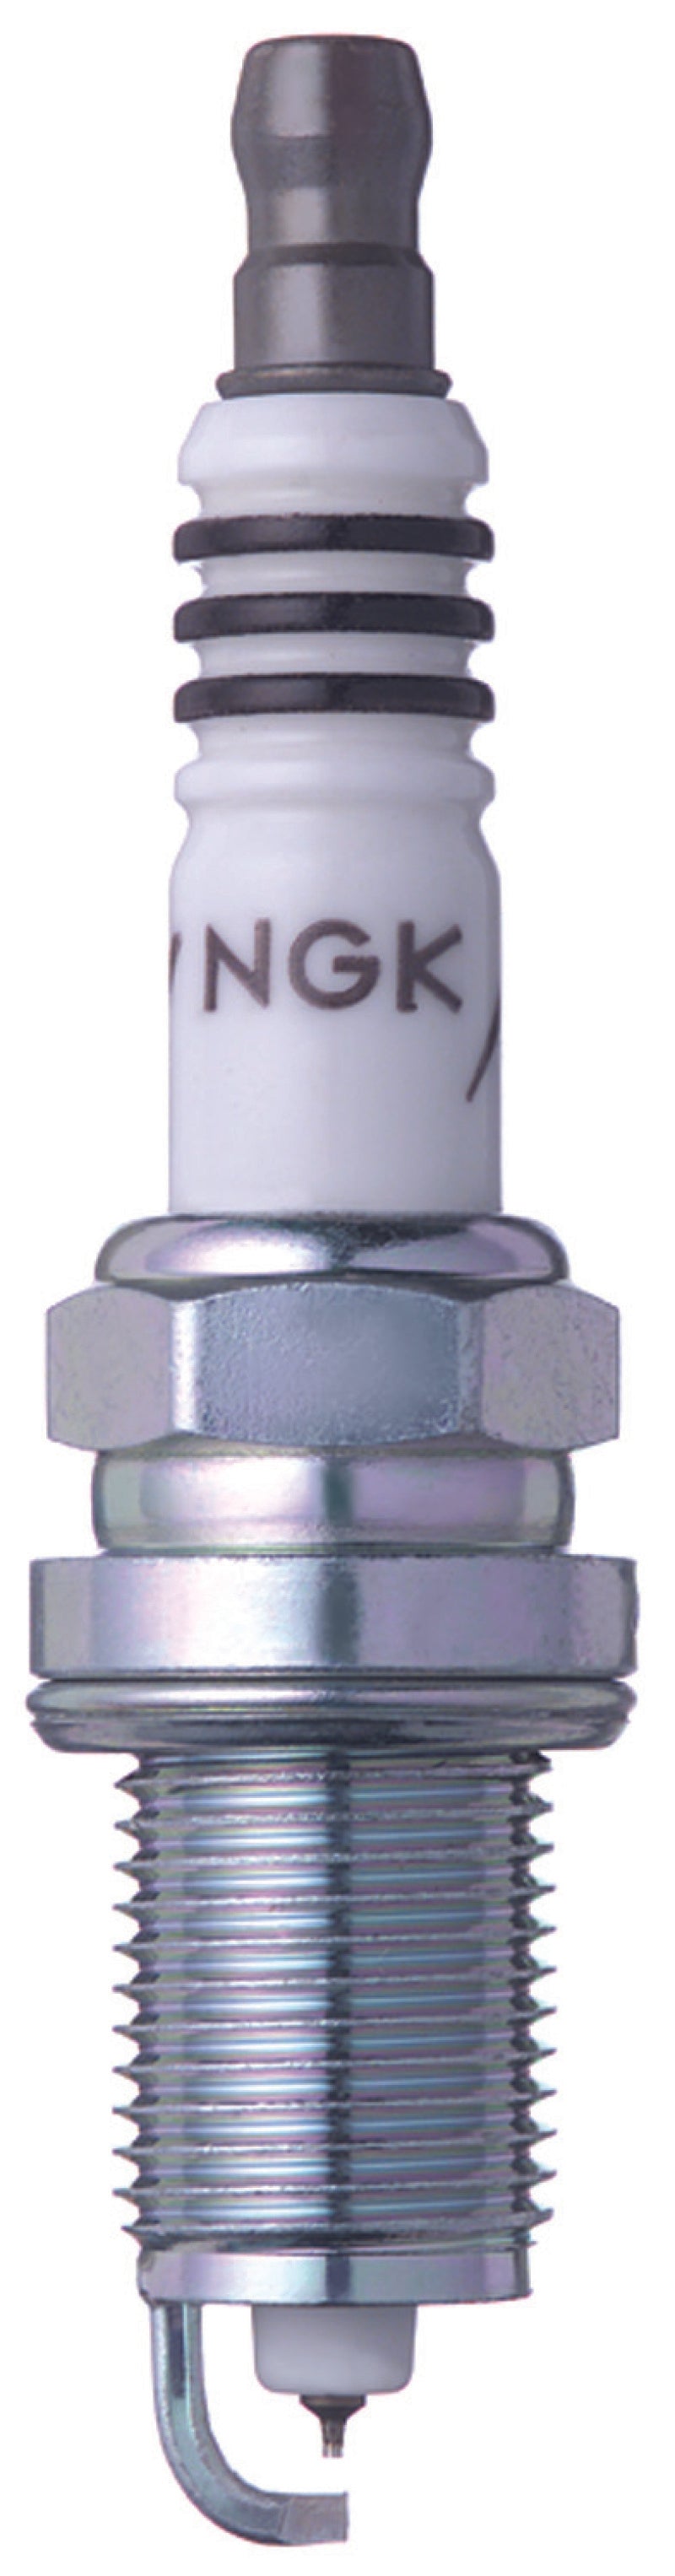 NGK Iridium Spark Plugs Box of 4 (ZFR5FIX-11).